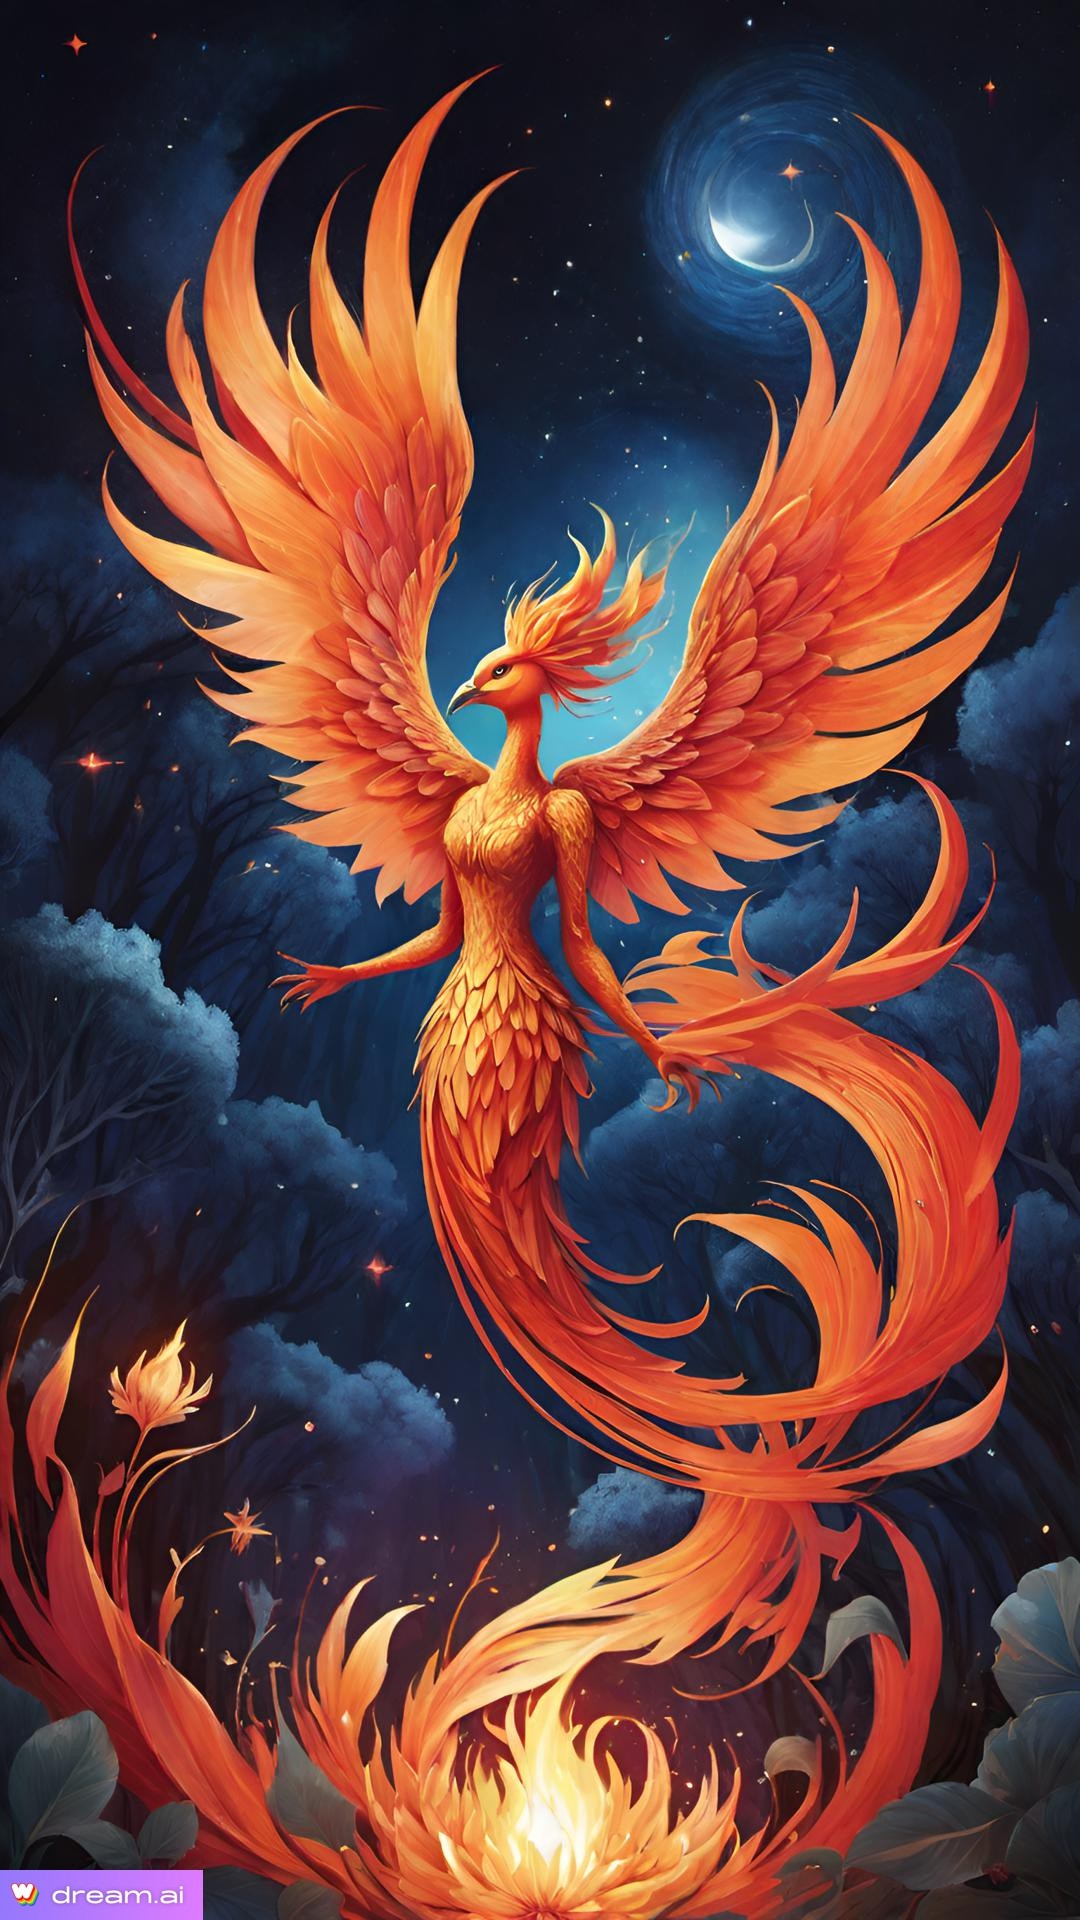 a digital art of a phoenix